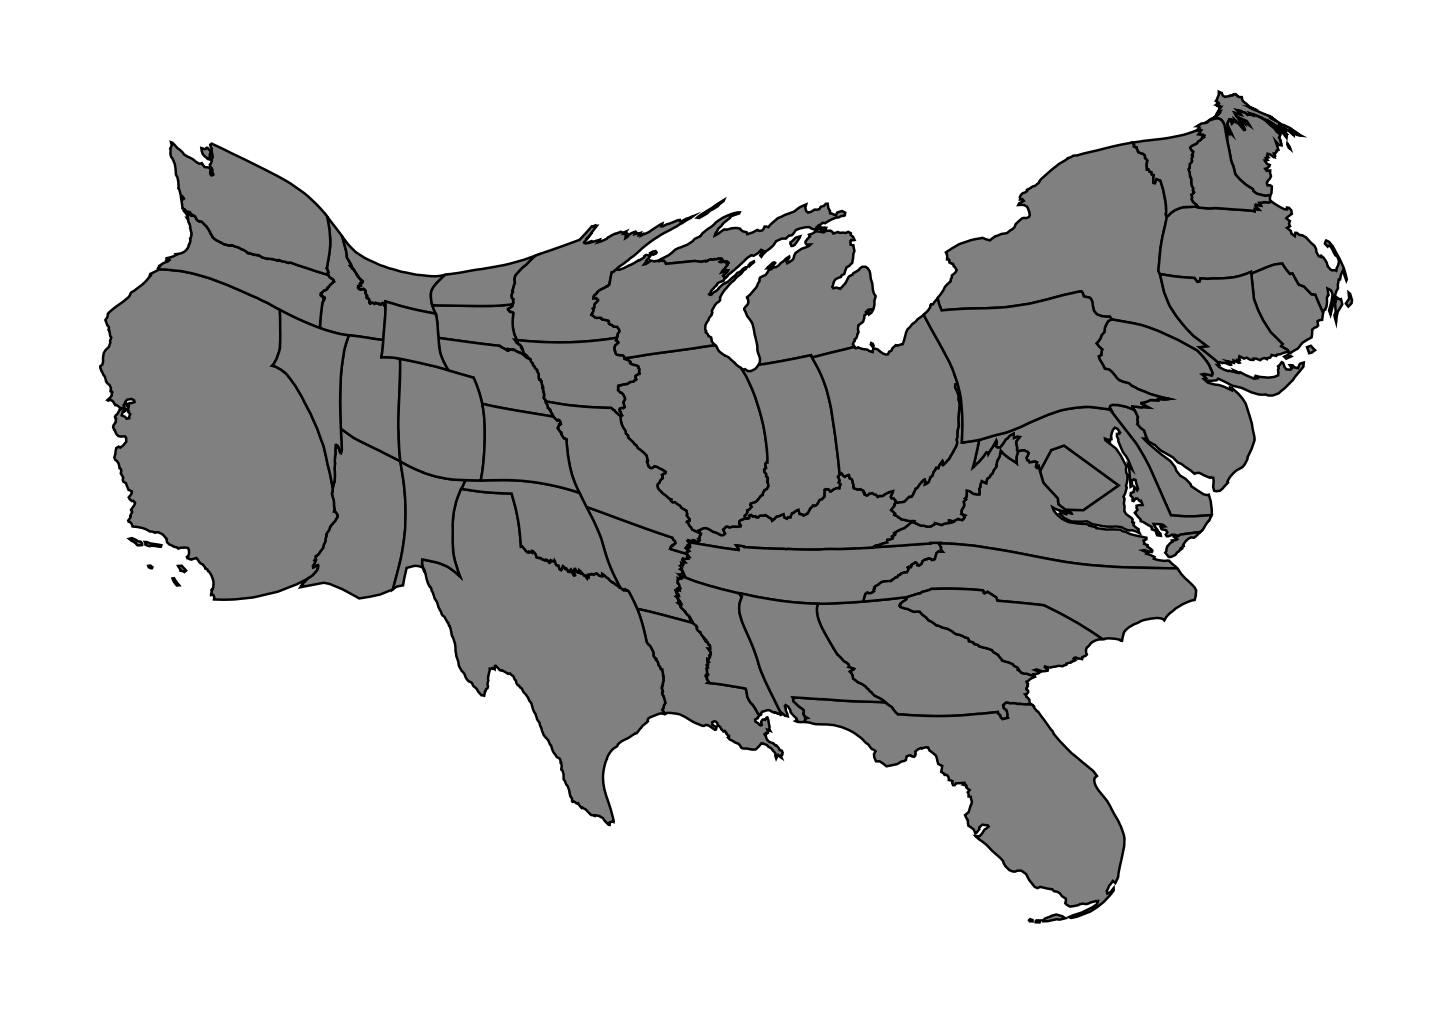 US_election_2016_cartogram.png